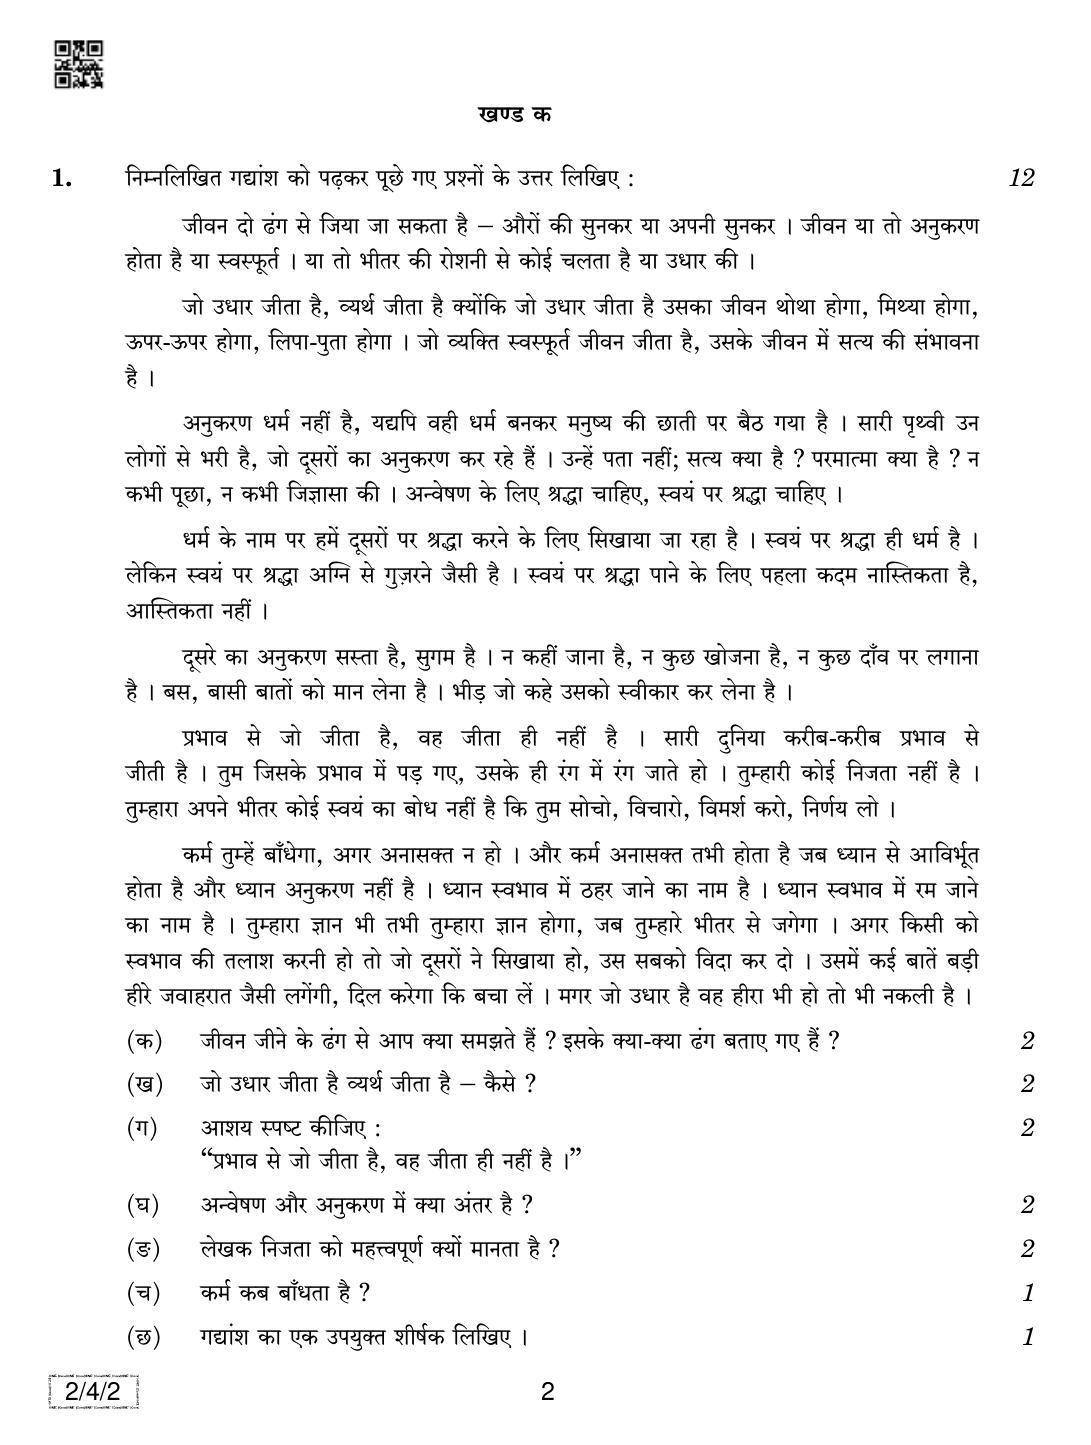 CBSE Class 12 2-4-2 Hindi Core 2019 Question Paper - Page 2